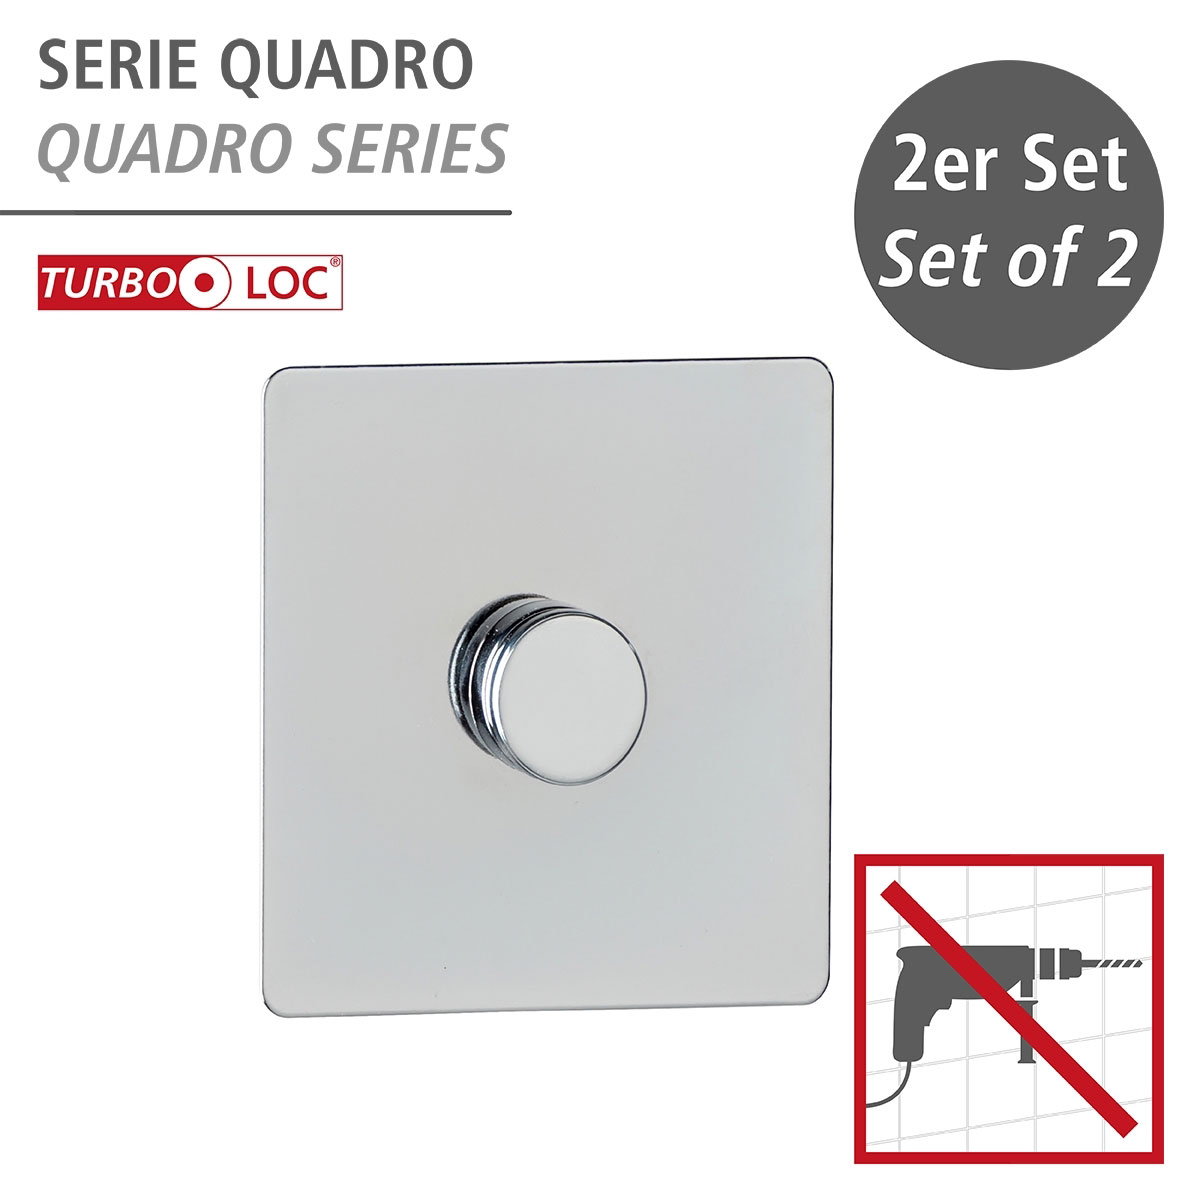 Adapter 2er Befestigen bohren Set Uno Quadro ohne Wenko 503694 Turbo-Loc | Edelstahl